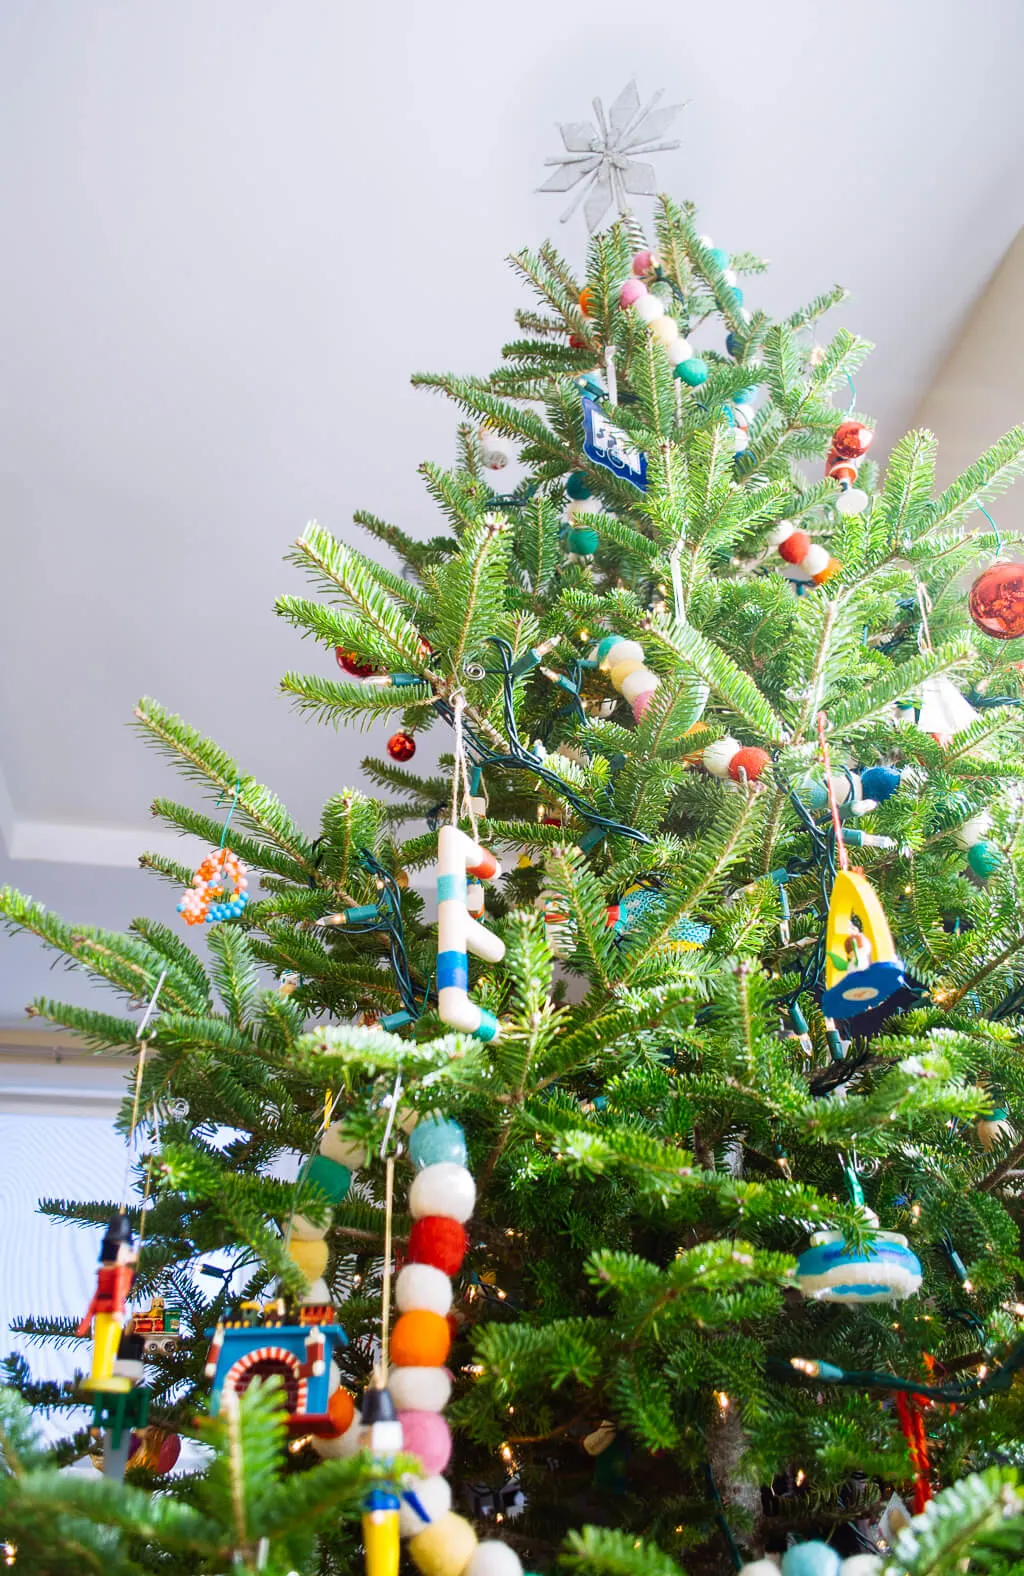 My decorated Christmas tree #ohchristmastree #christmastree #christmas